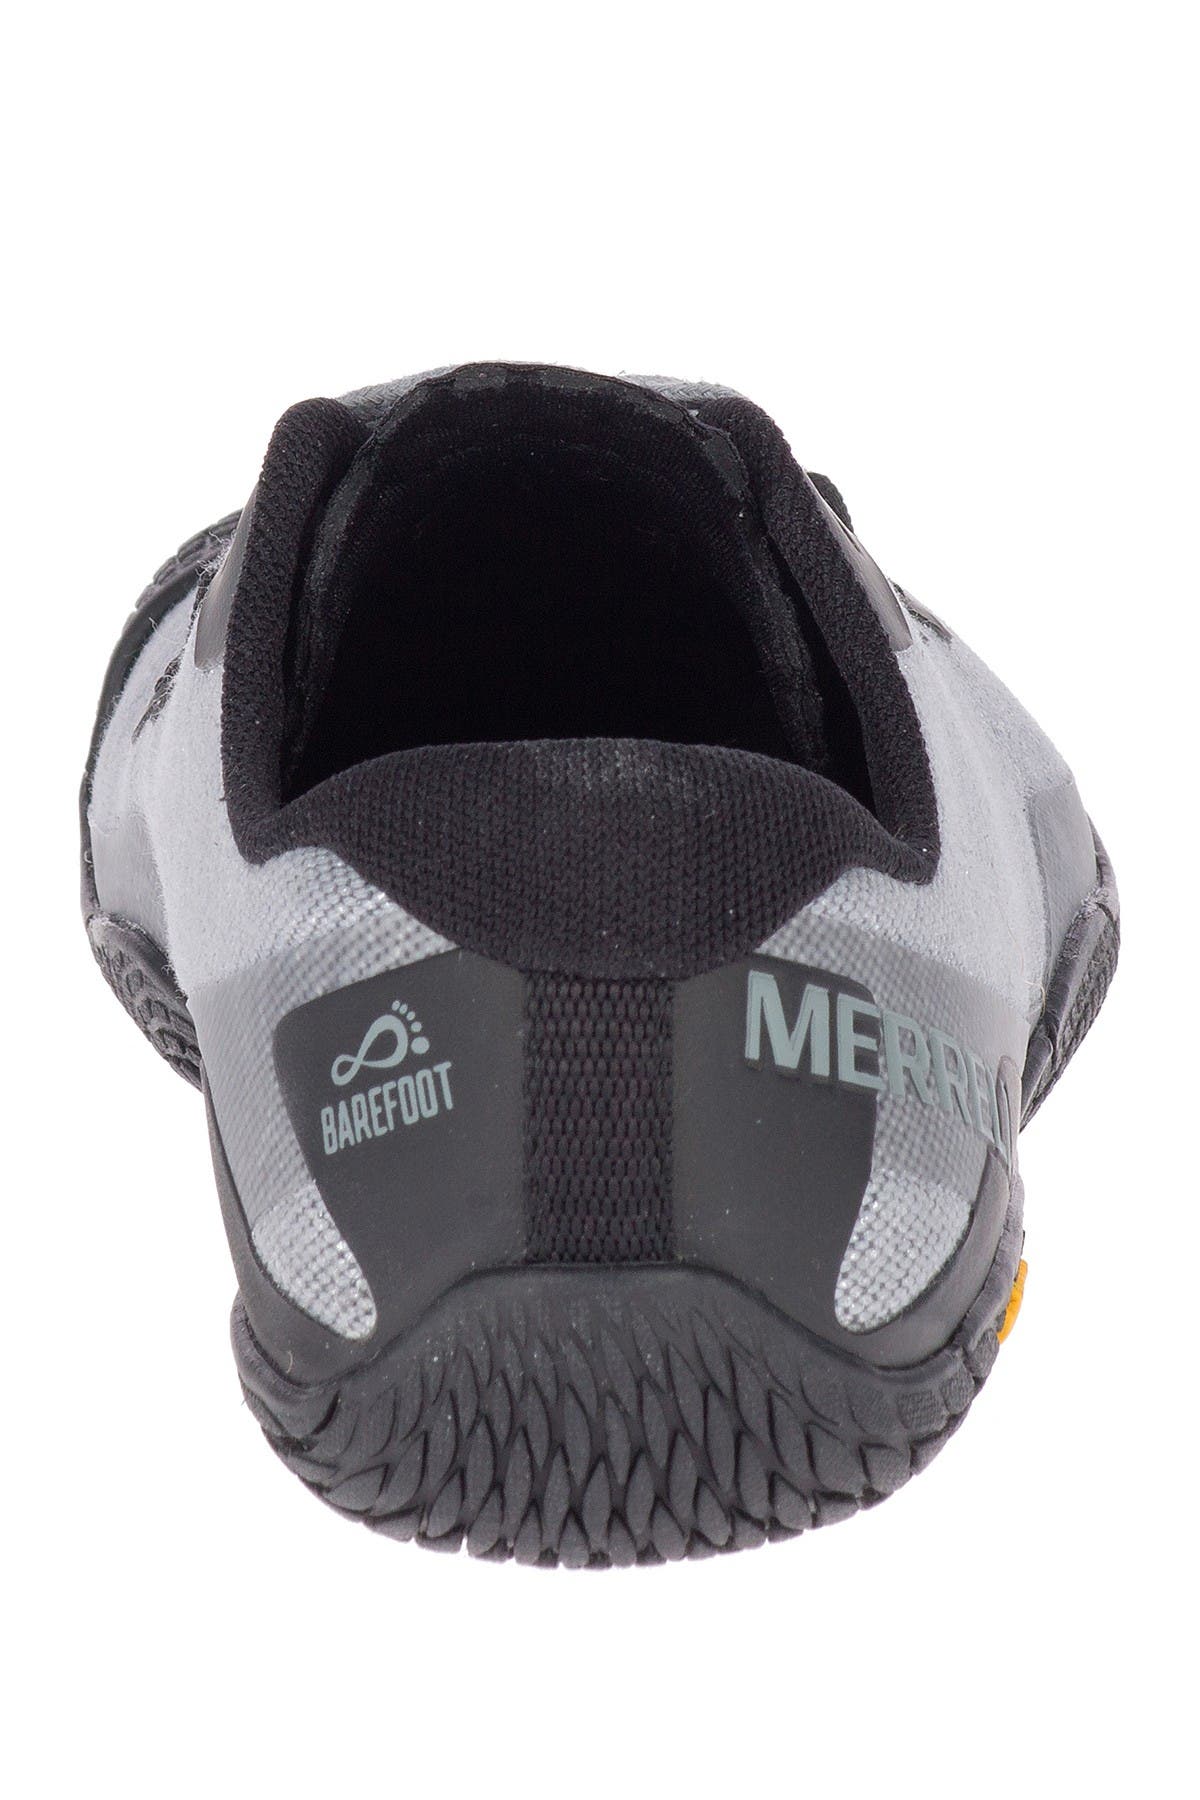 merrell vapor glove 3 cotton review